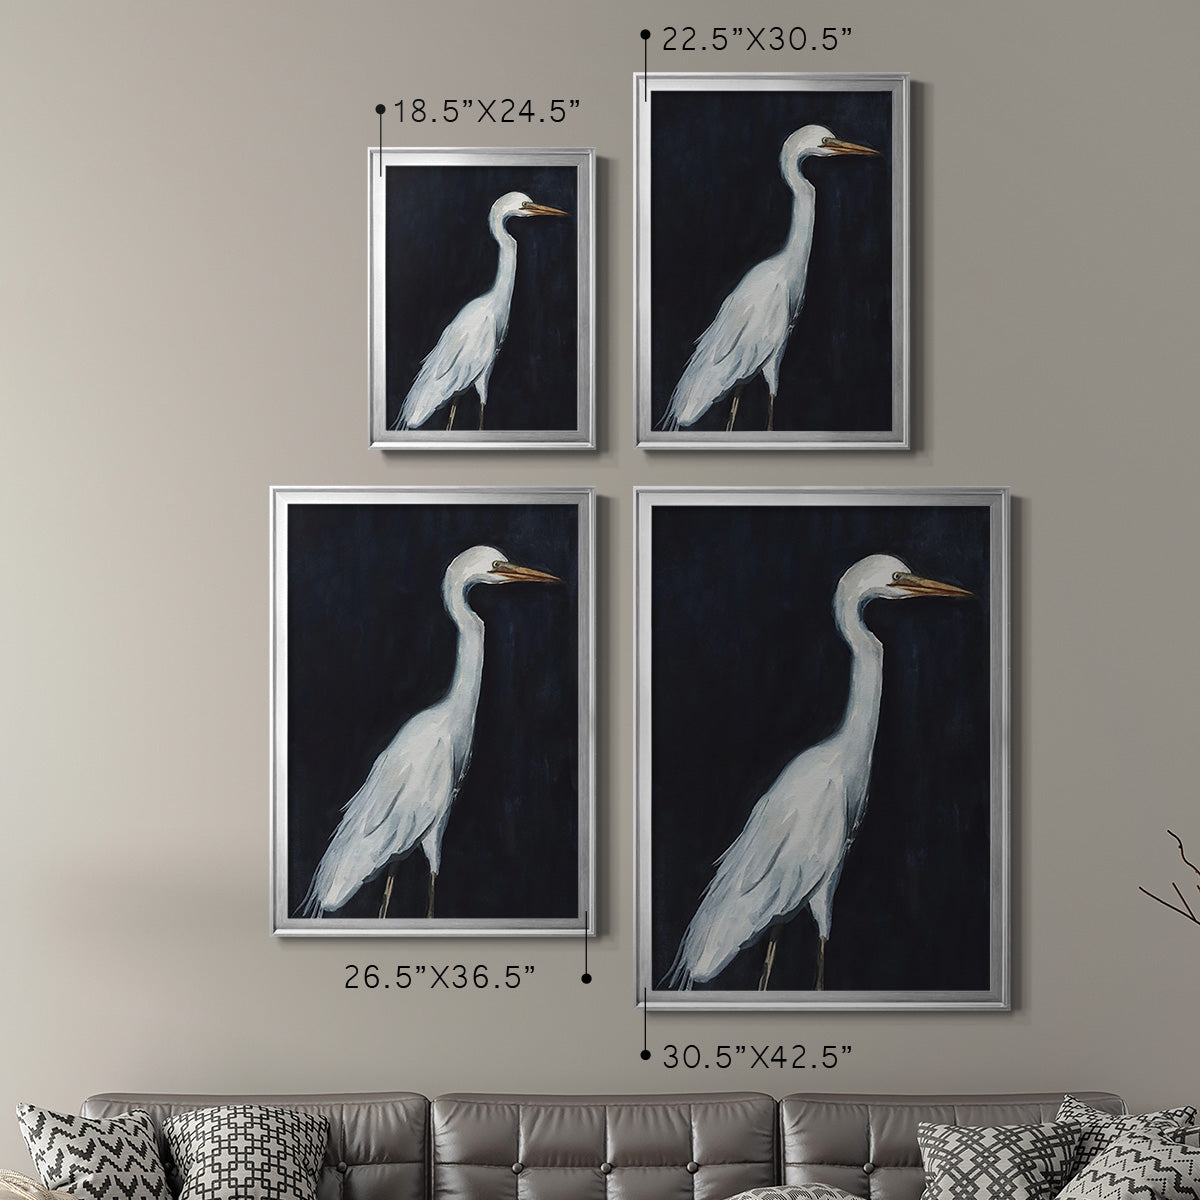 Calm Great Egret II Premium Framed Print - Ready to Hang